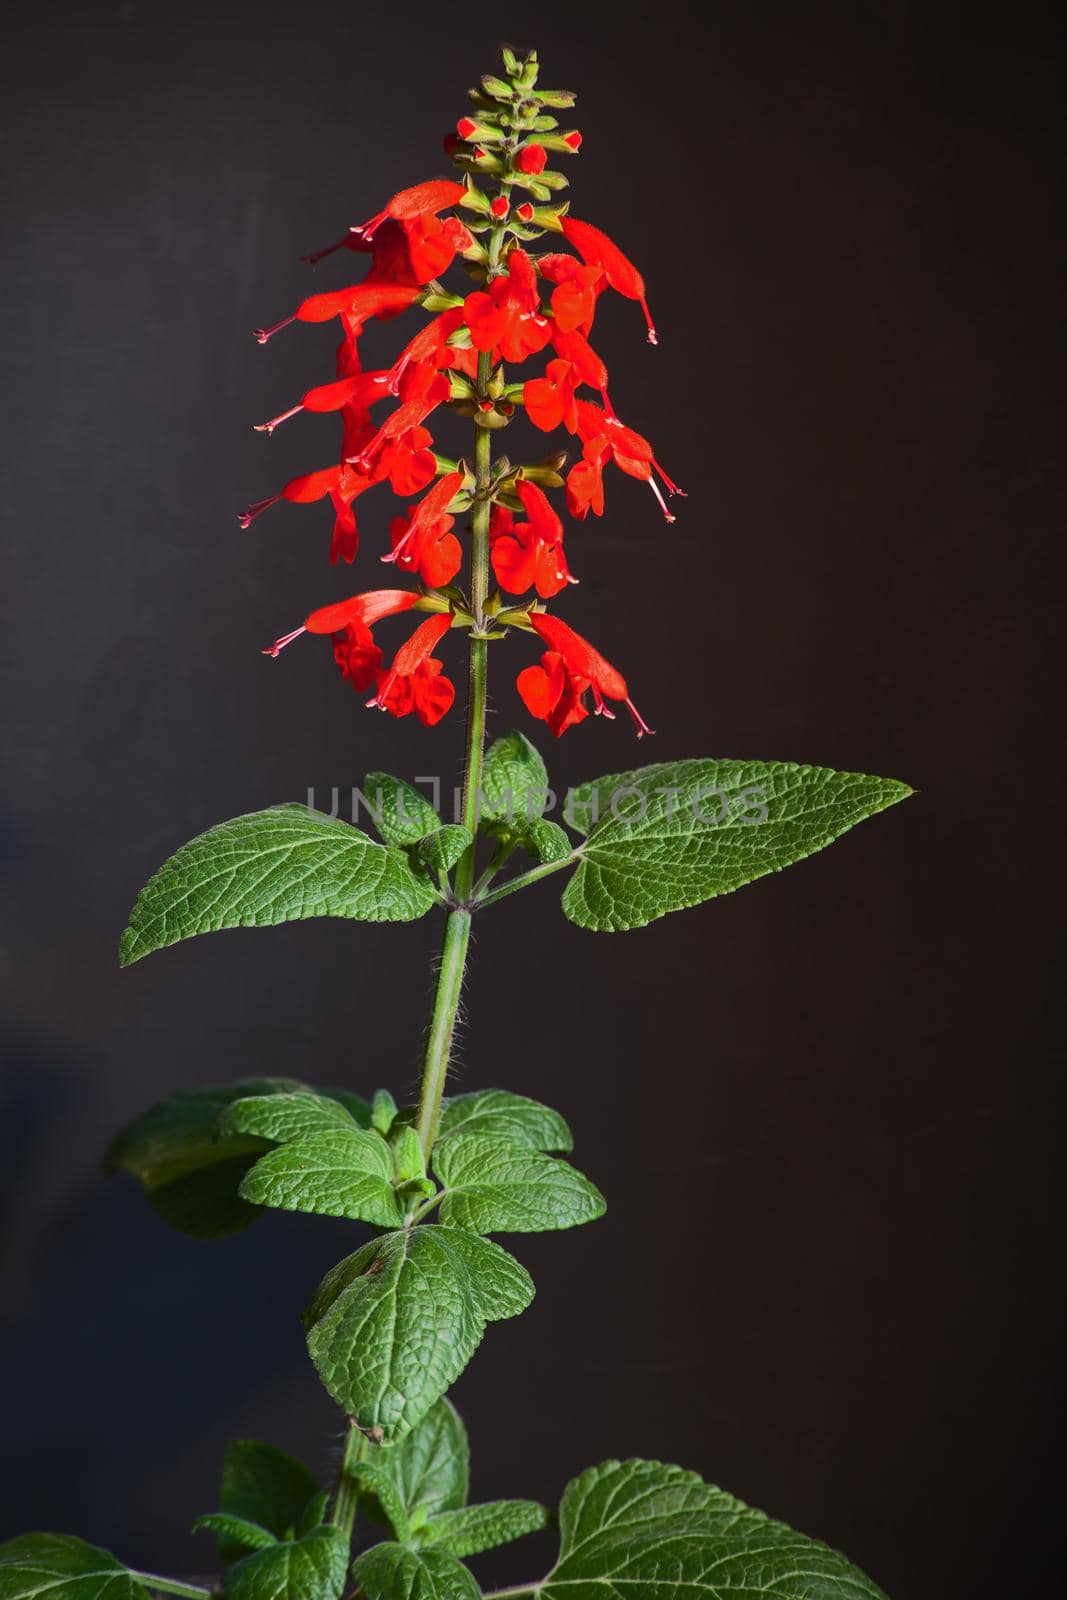 Red Sage Salvia splendens 13199 by kobus_peche